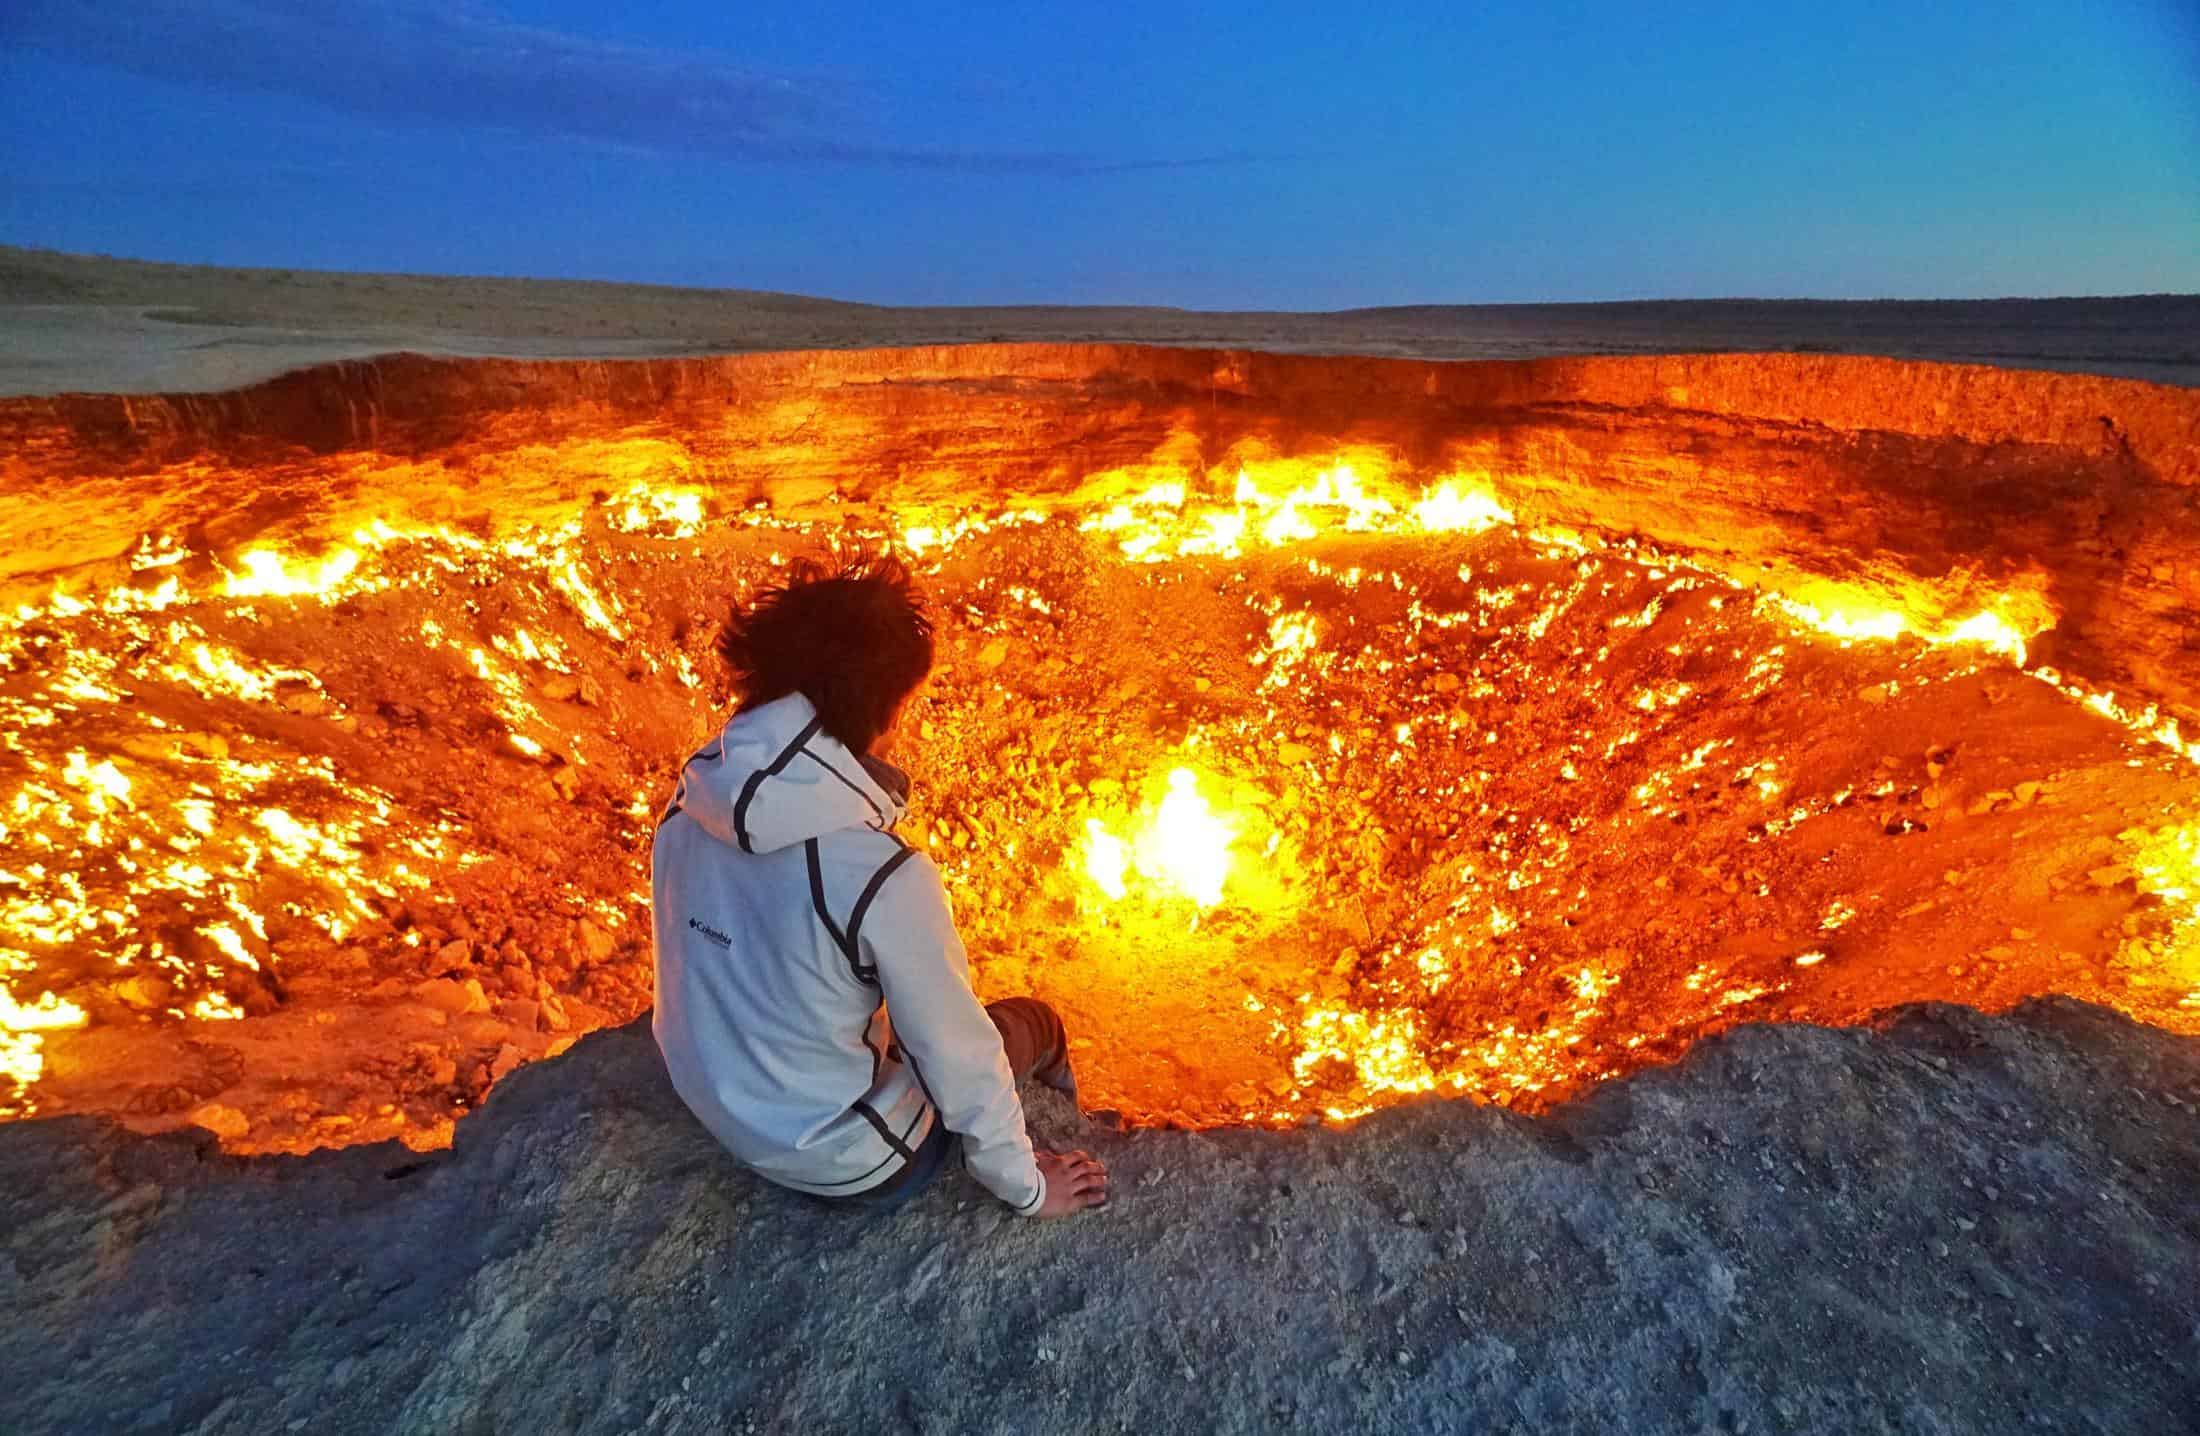 Природа создала человека много миллионов. "Врата ада" (Дарваза), Туркменистан. Газовый кратер врата ада Туркменистан. Дарваза́ — газовый кратер в Туркмении. "Врата в ад", Дарваза, Туркменистан.